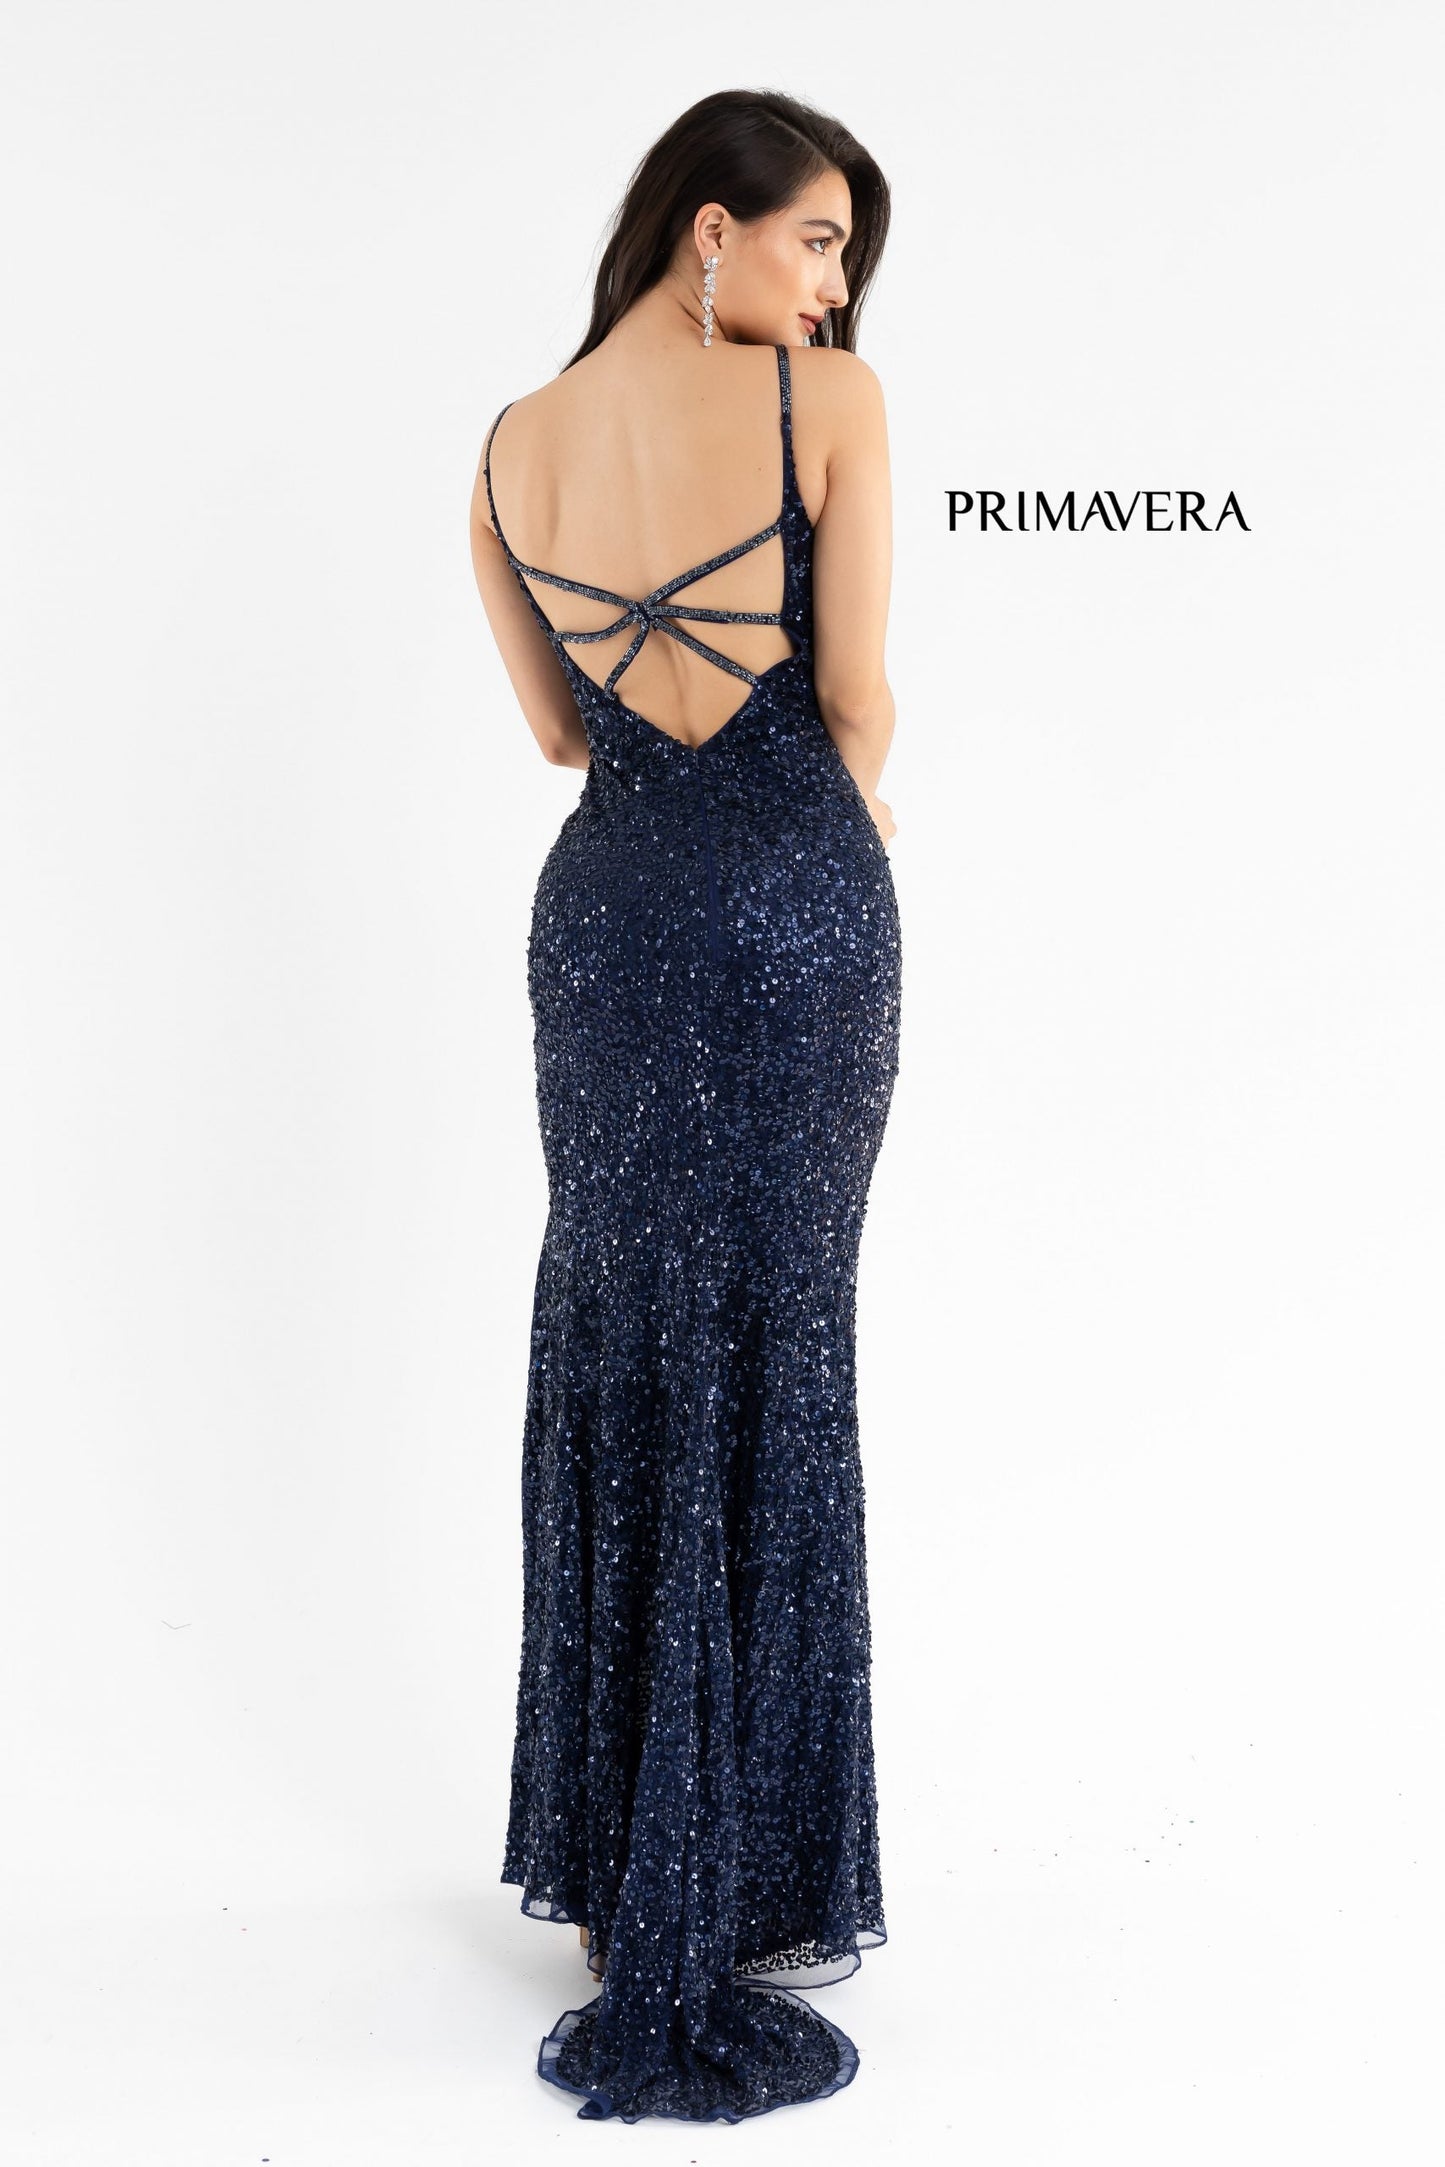 Primavera Couture 3792 Size 0, 12 Turquoise Sequin Prom Dress V Neckline Strappy Open Back Side Slit Train